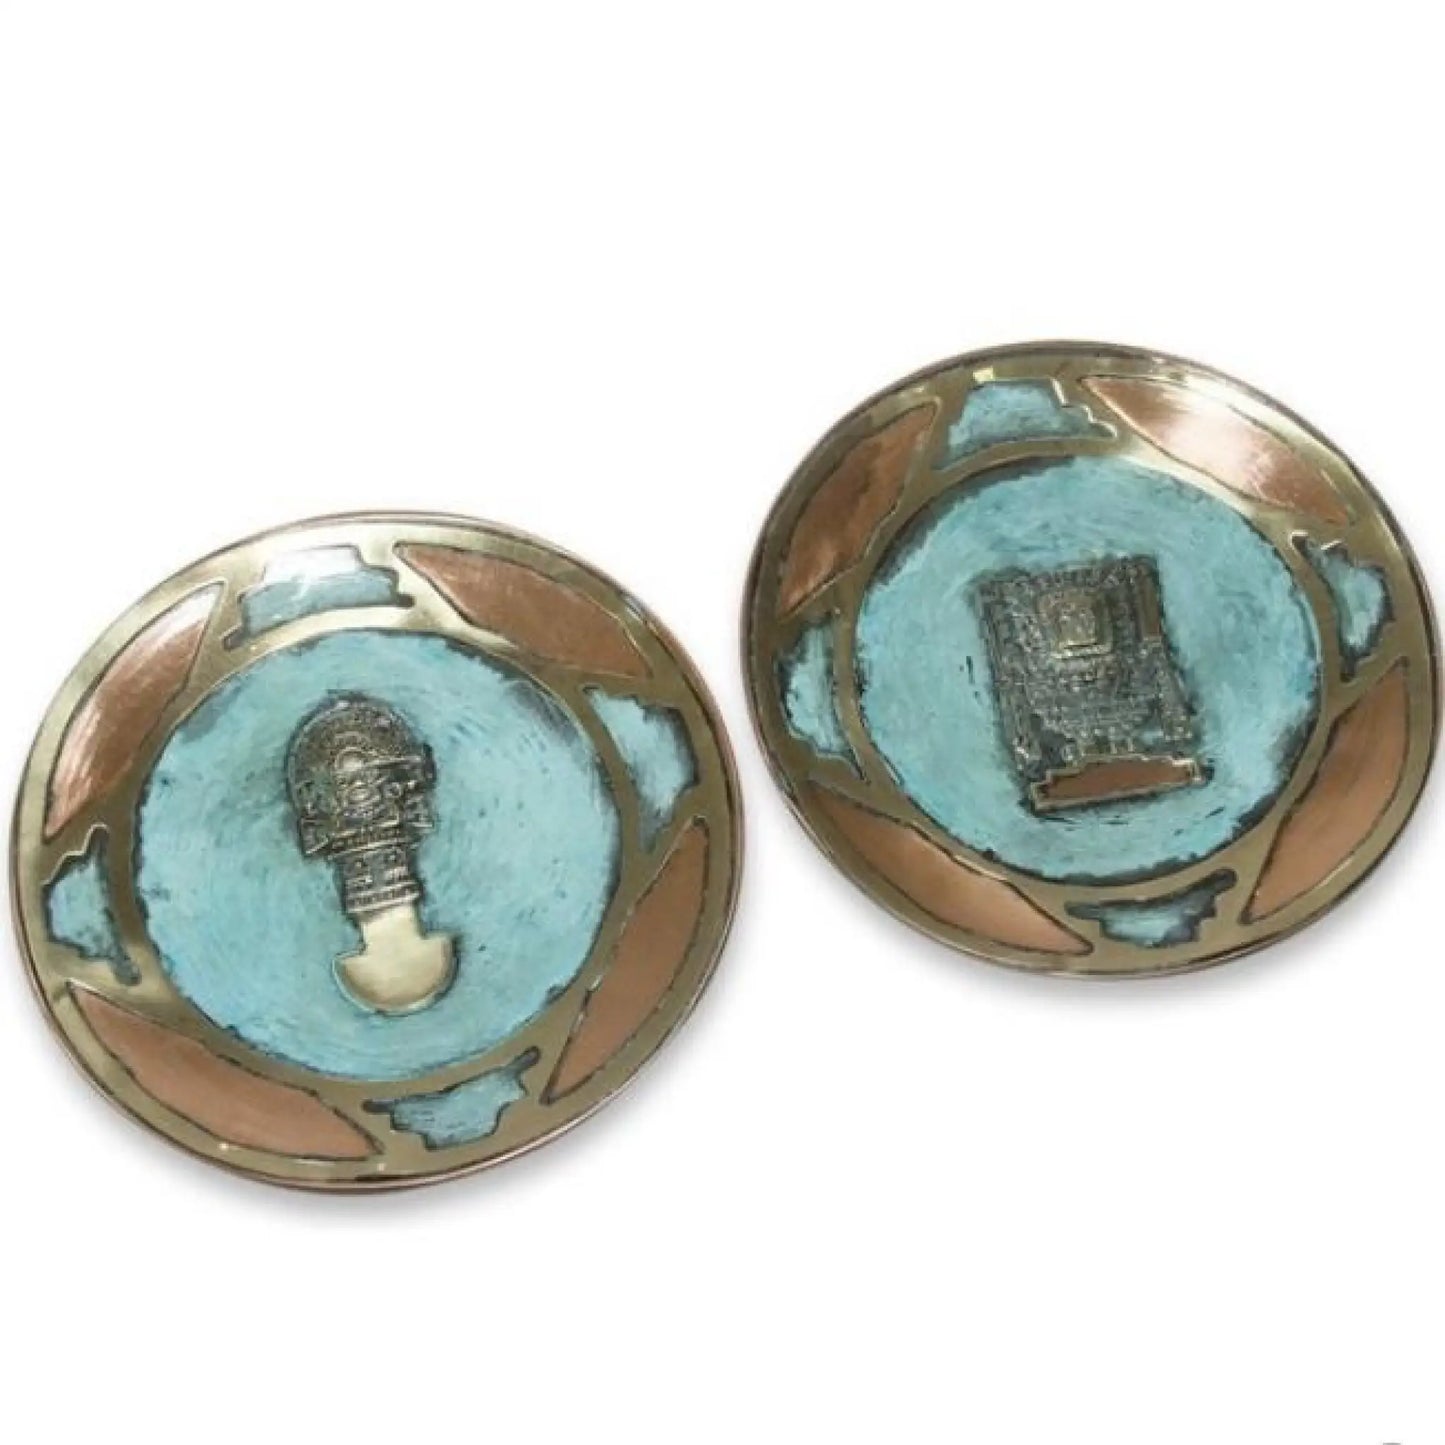 Wiracocha and Tumi Copper Bronze Plates Set of 2 - Art